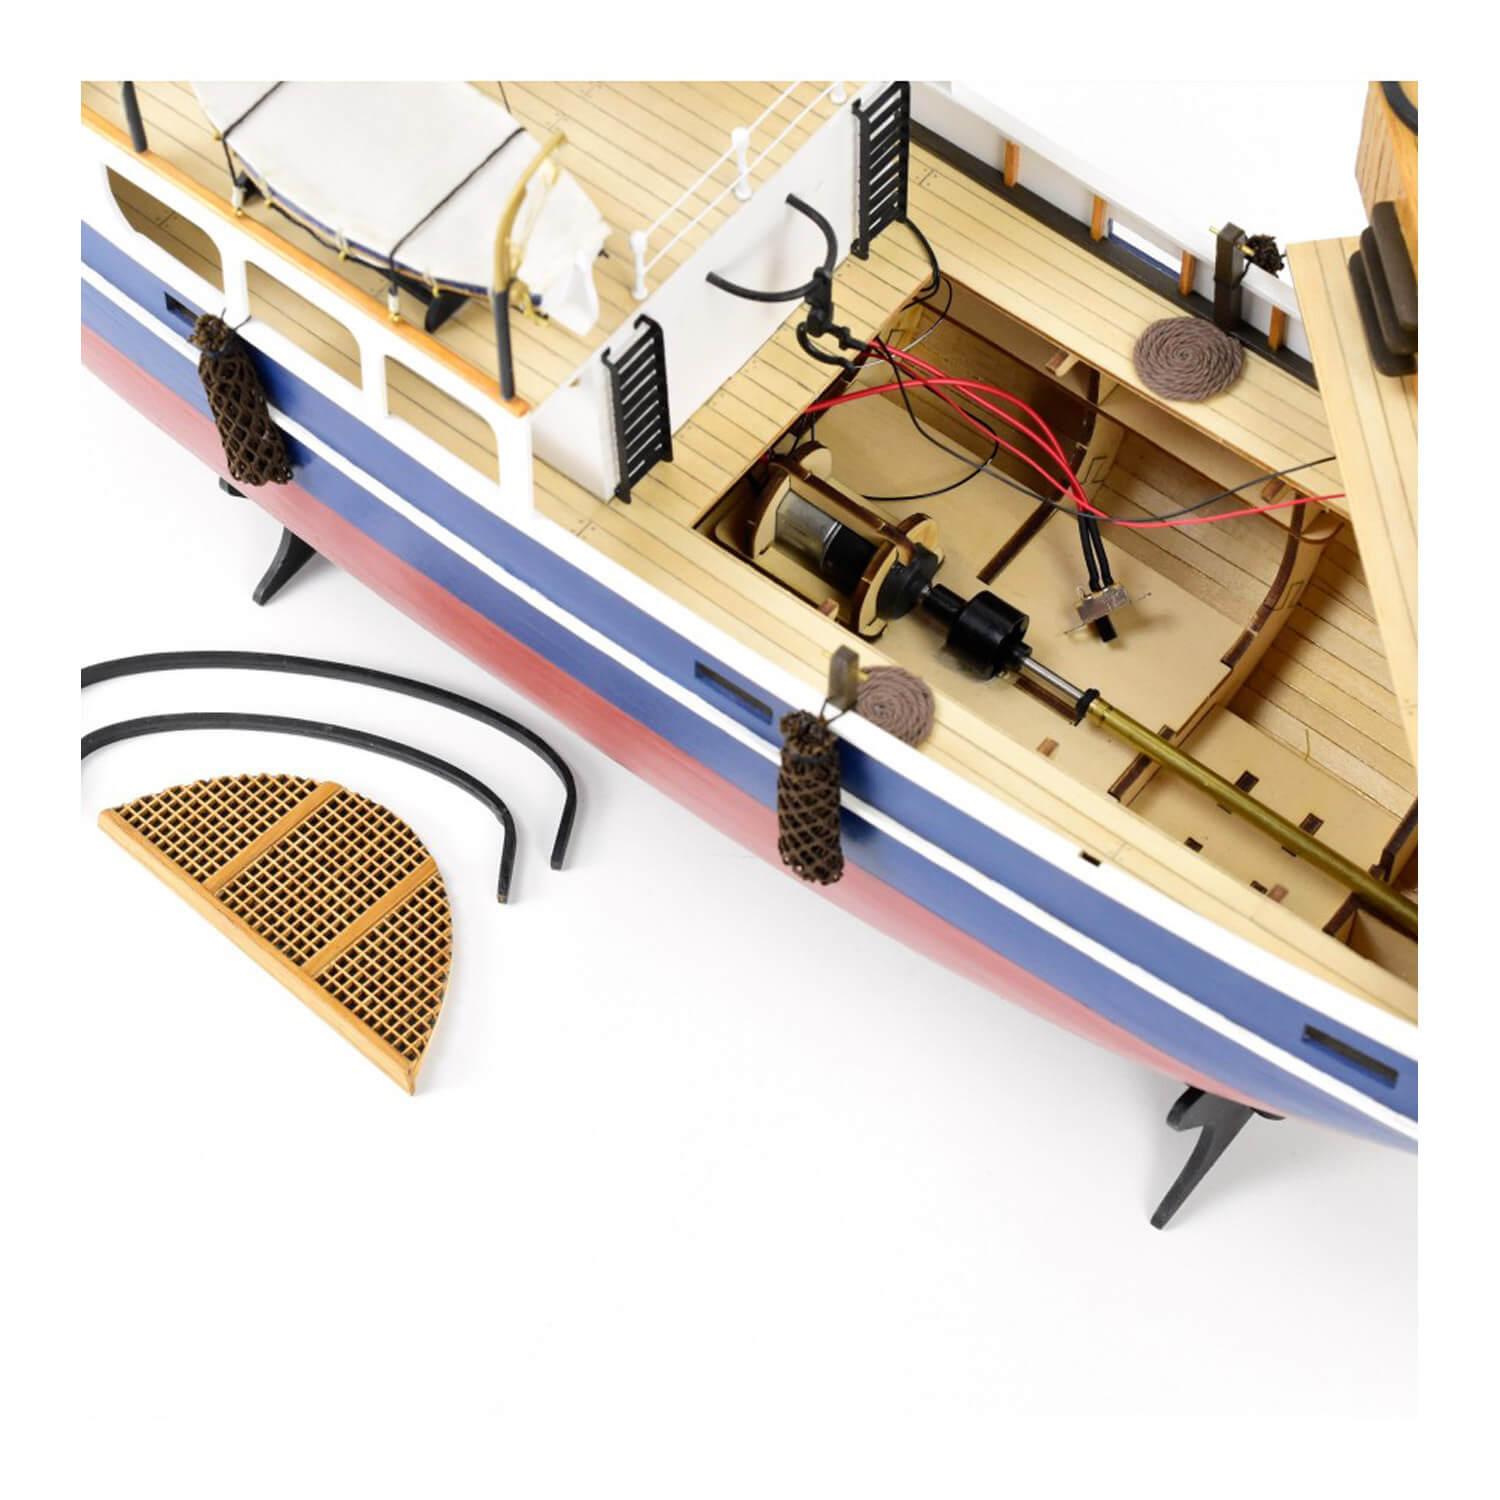 Wooden boat model: Samson tugboat - Artesania - Scale Model Boulevard